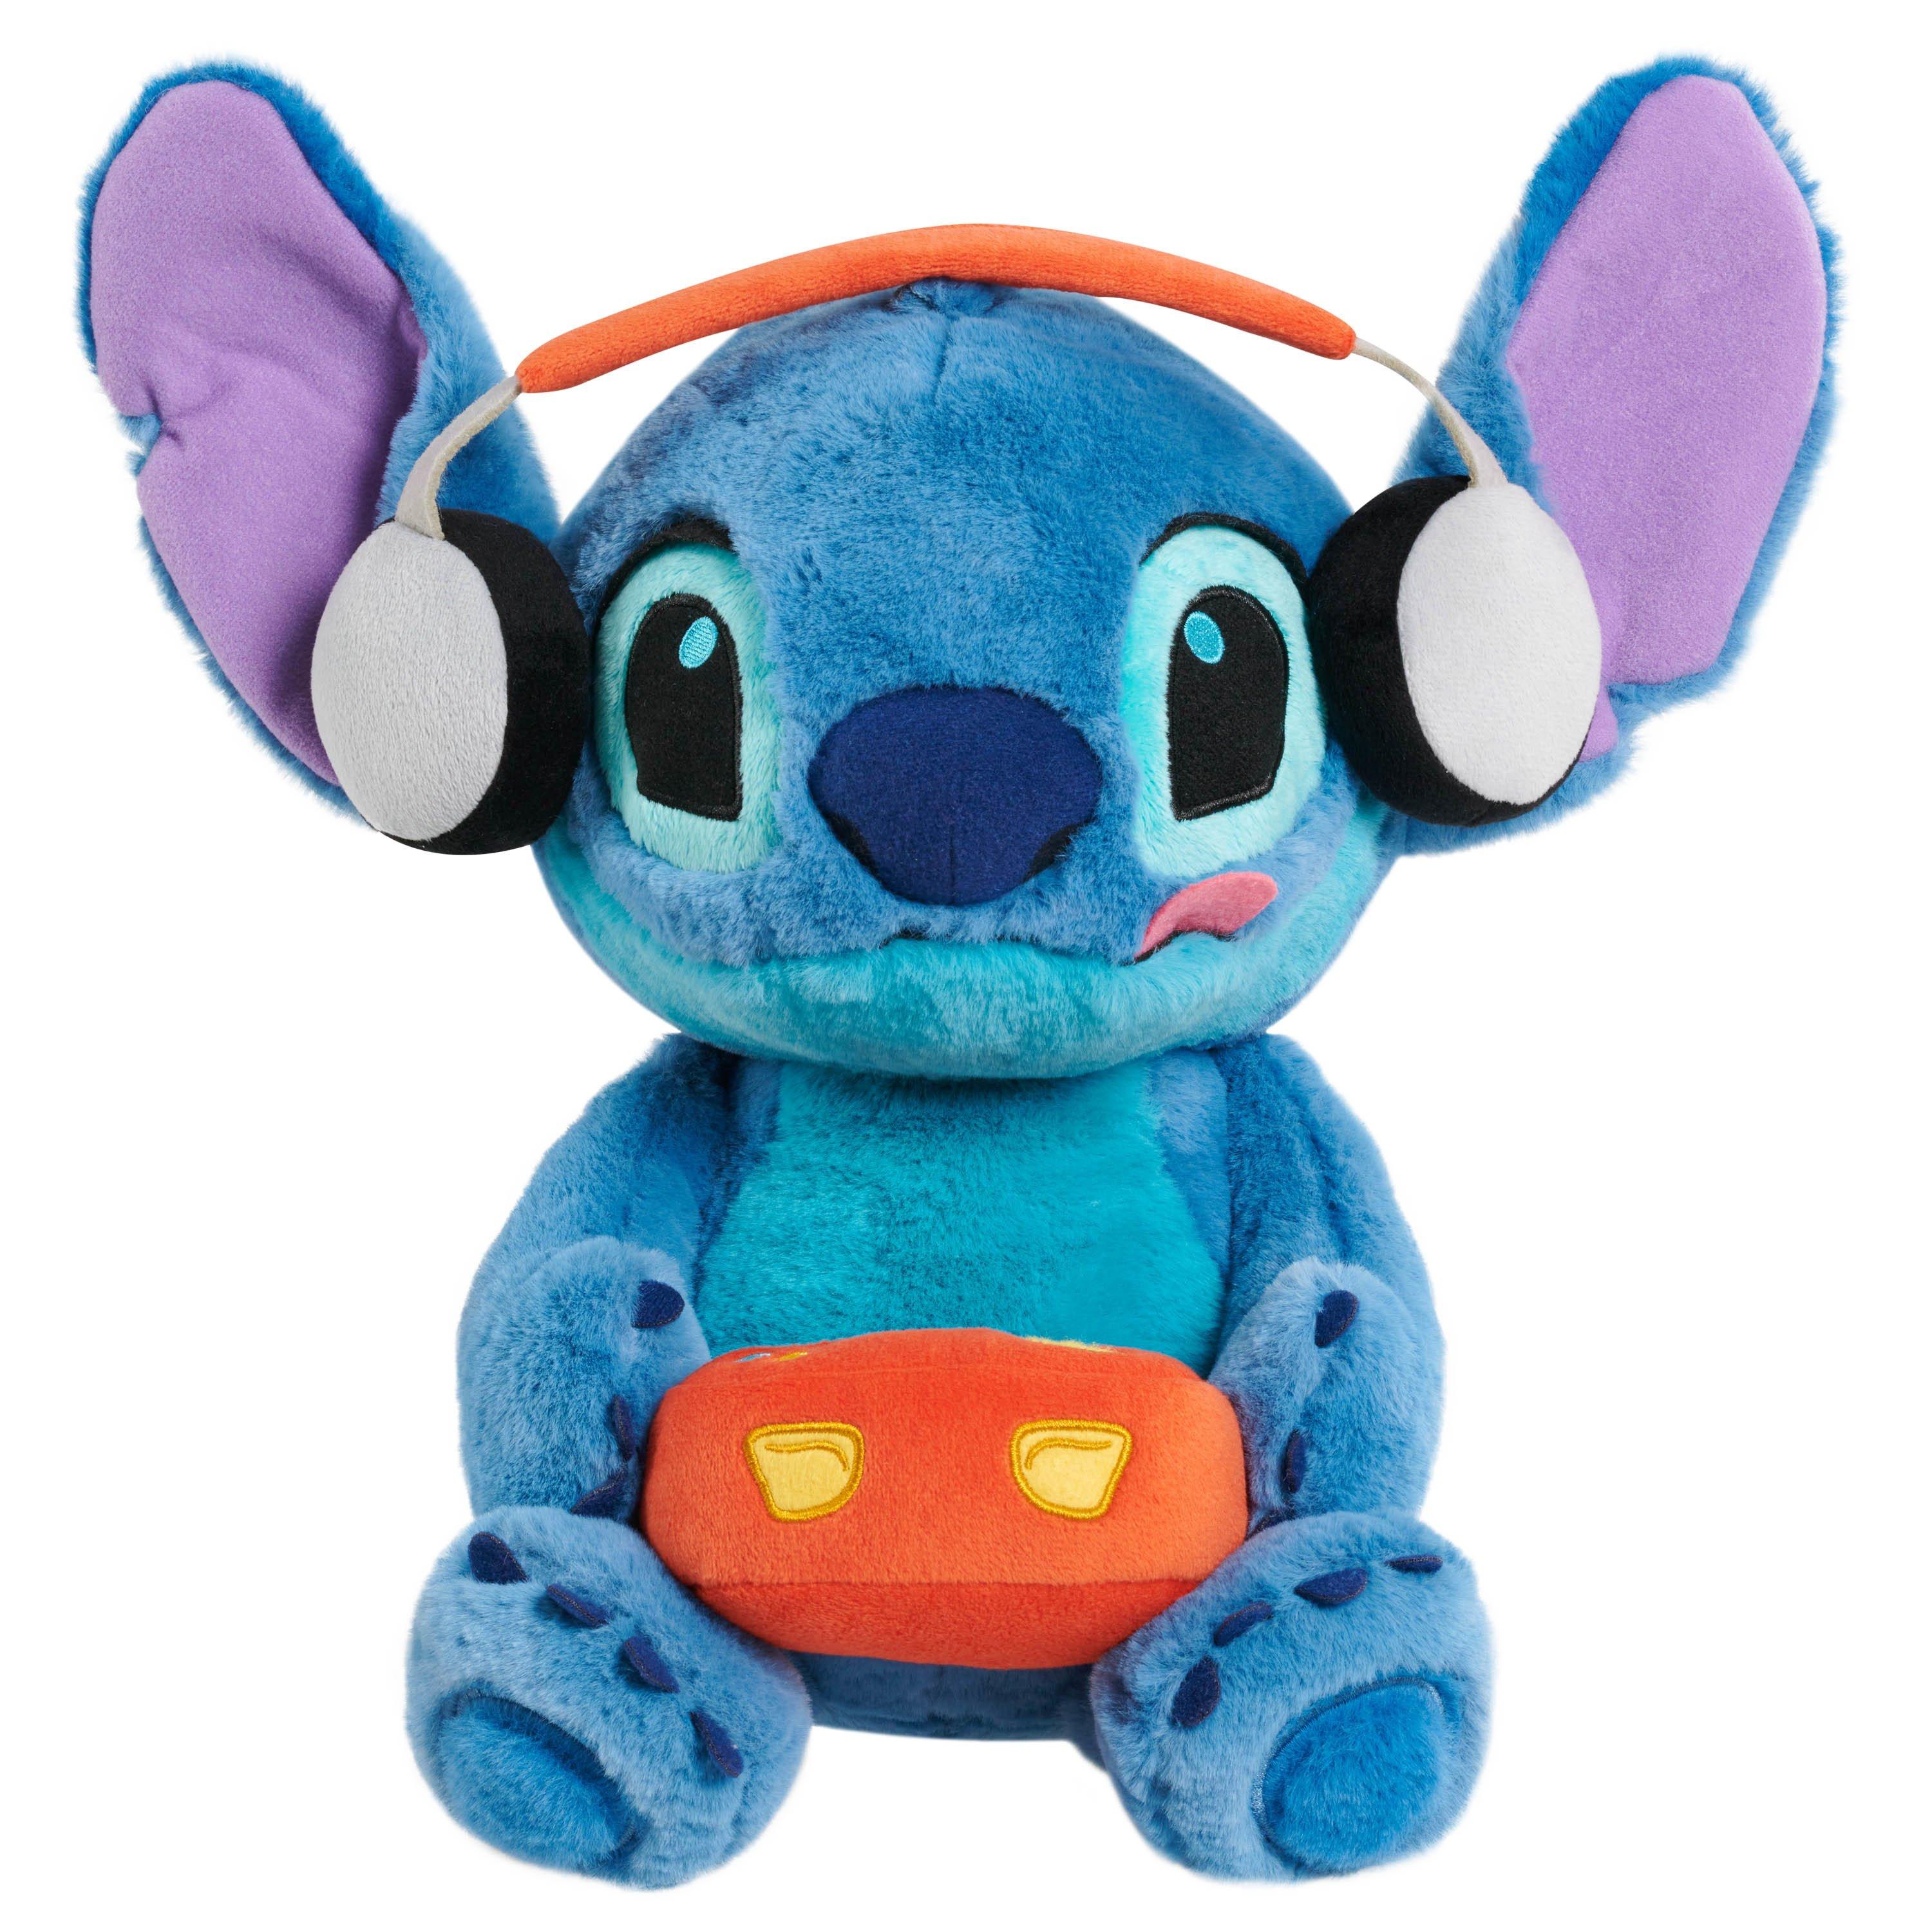 Disney Store Exclusive Stitch Plush from Lilo & Stitch Stuffed Animal 10